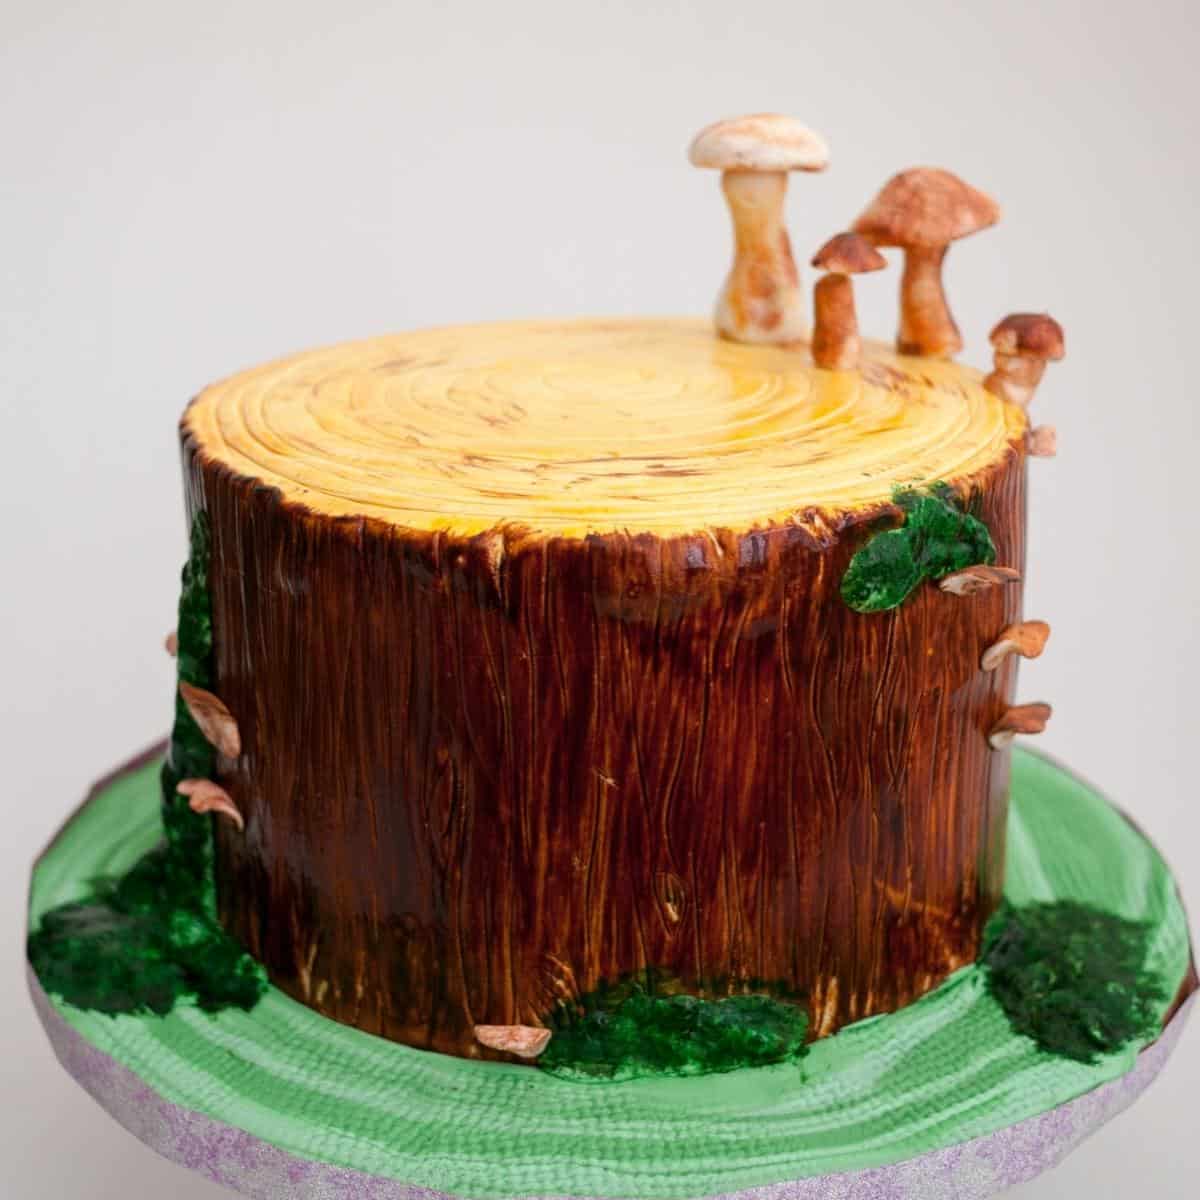 Log Cake Tutorial